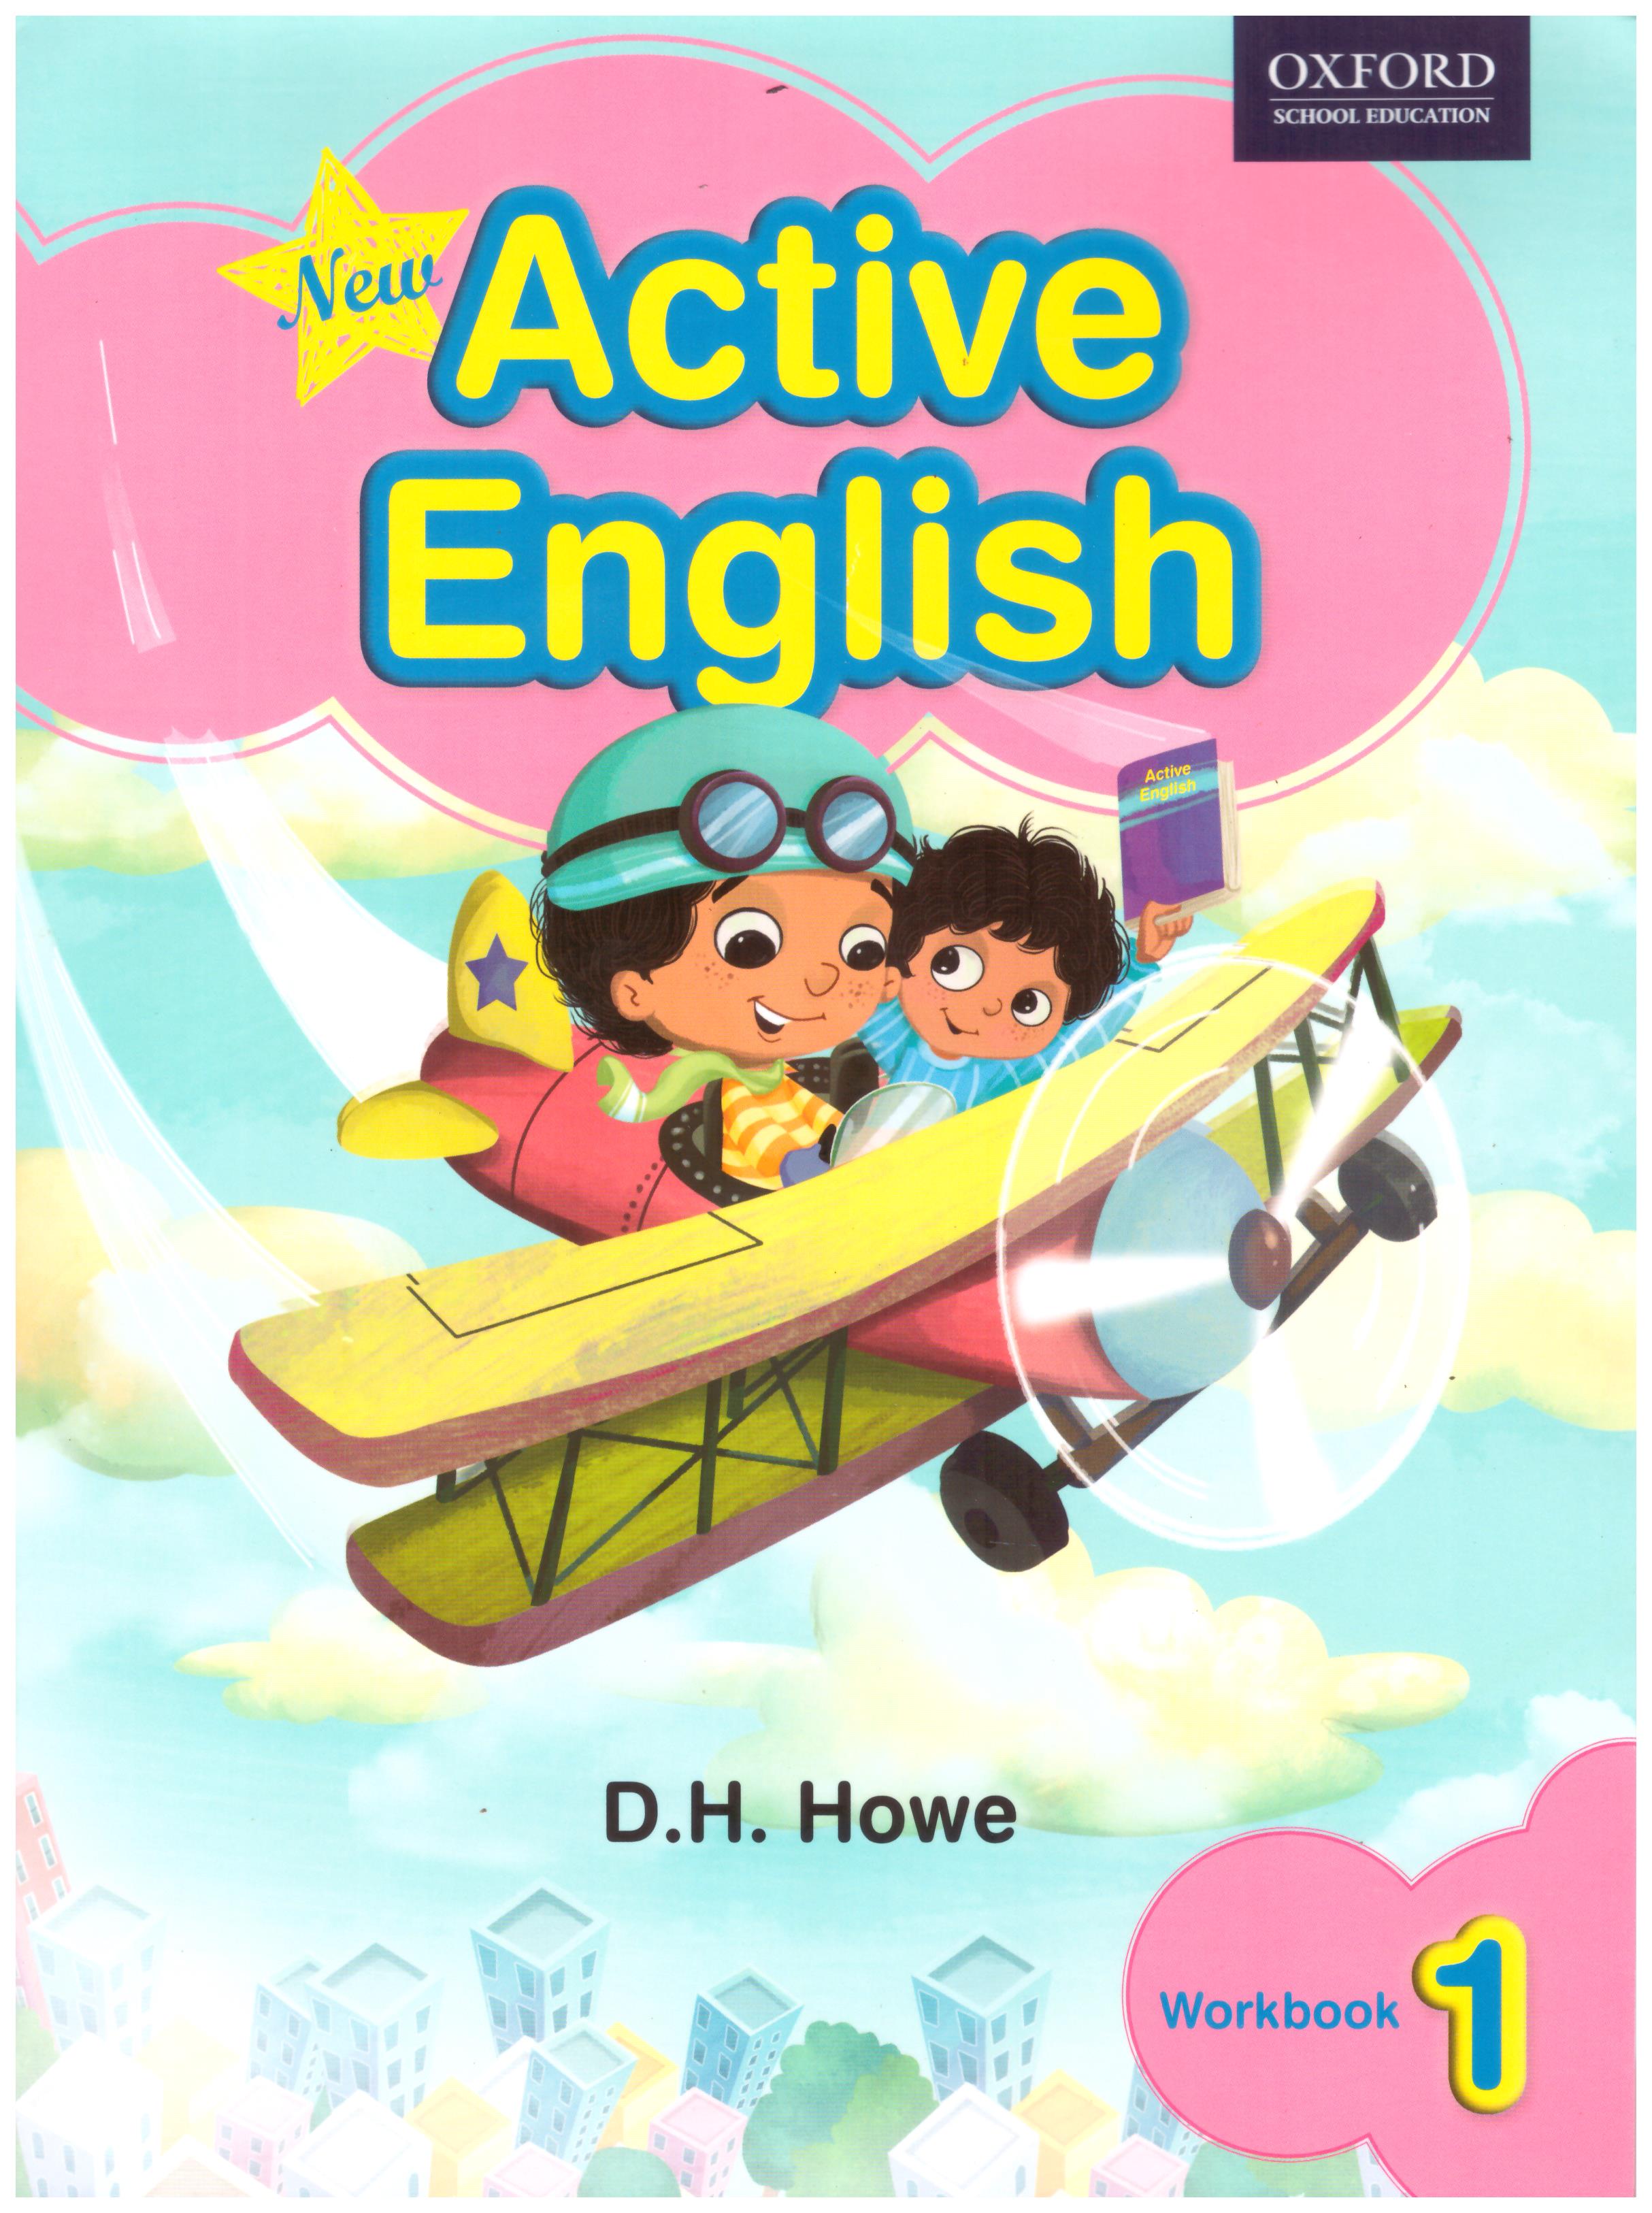 New Activity English Workbook 01